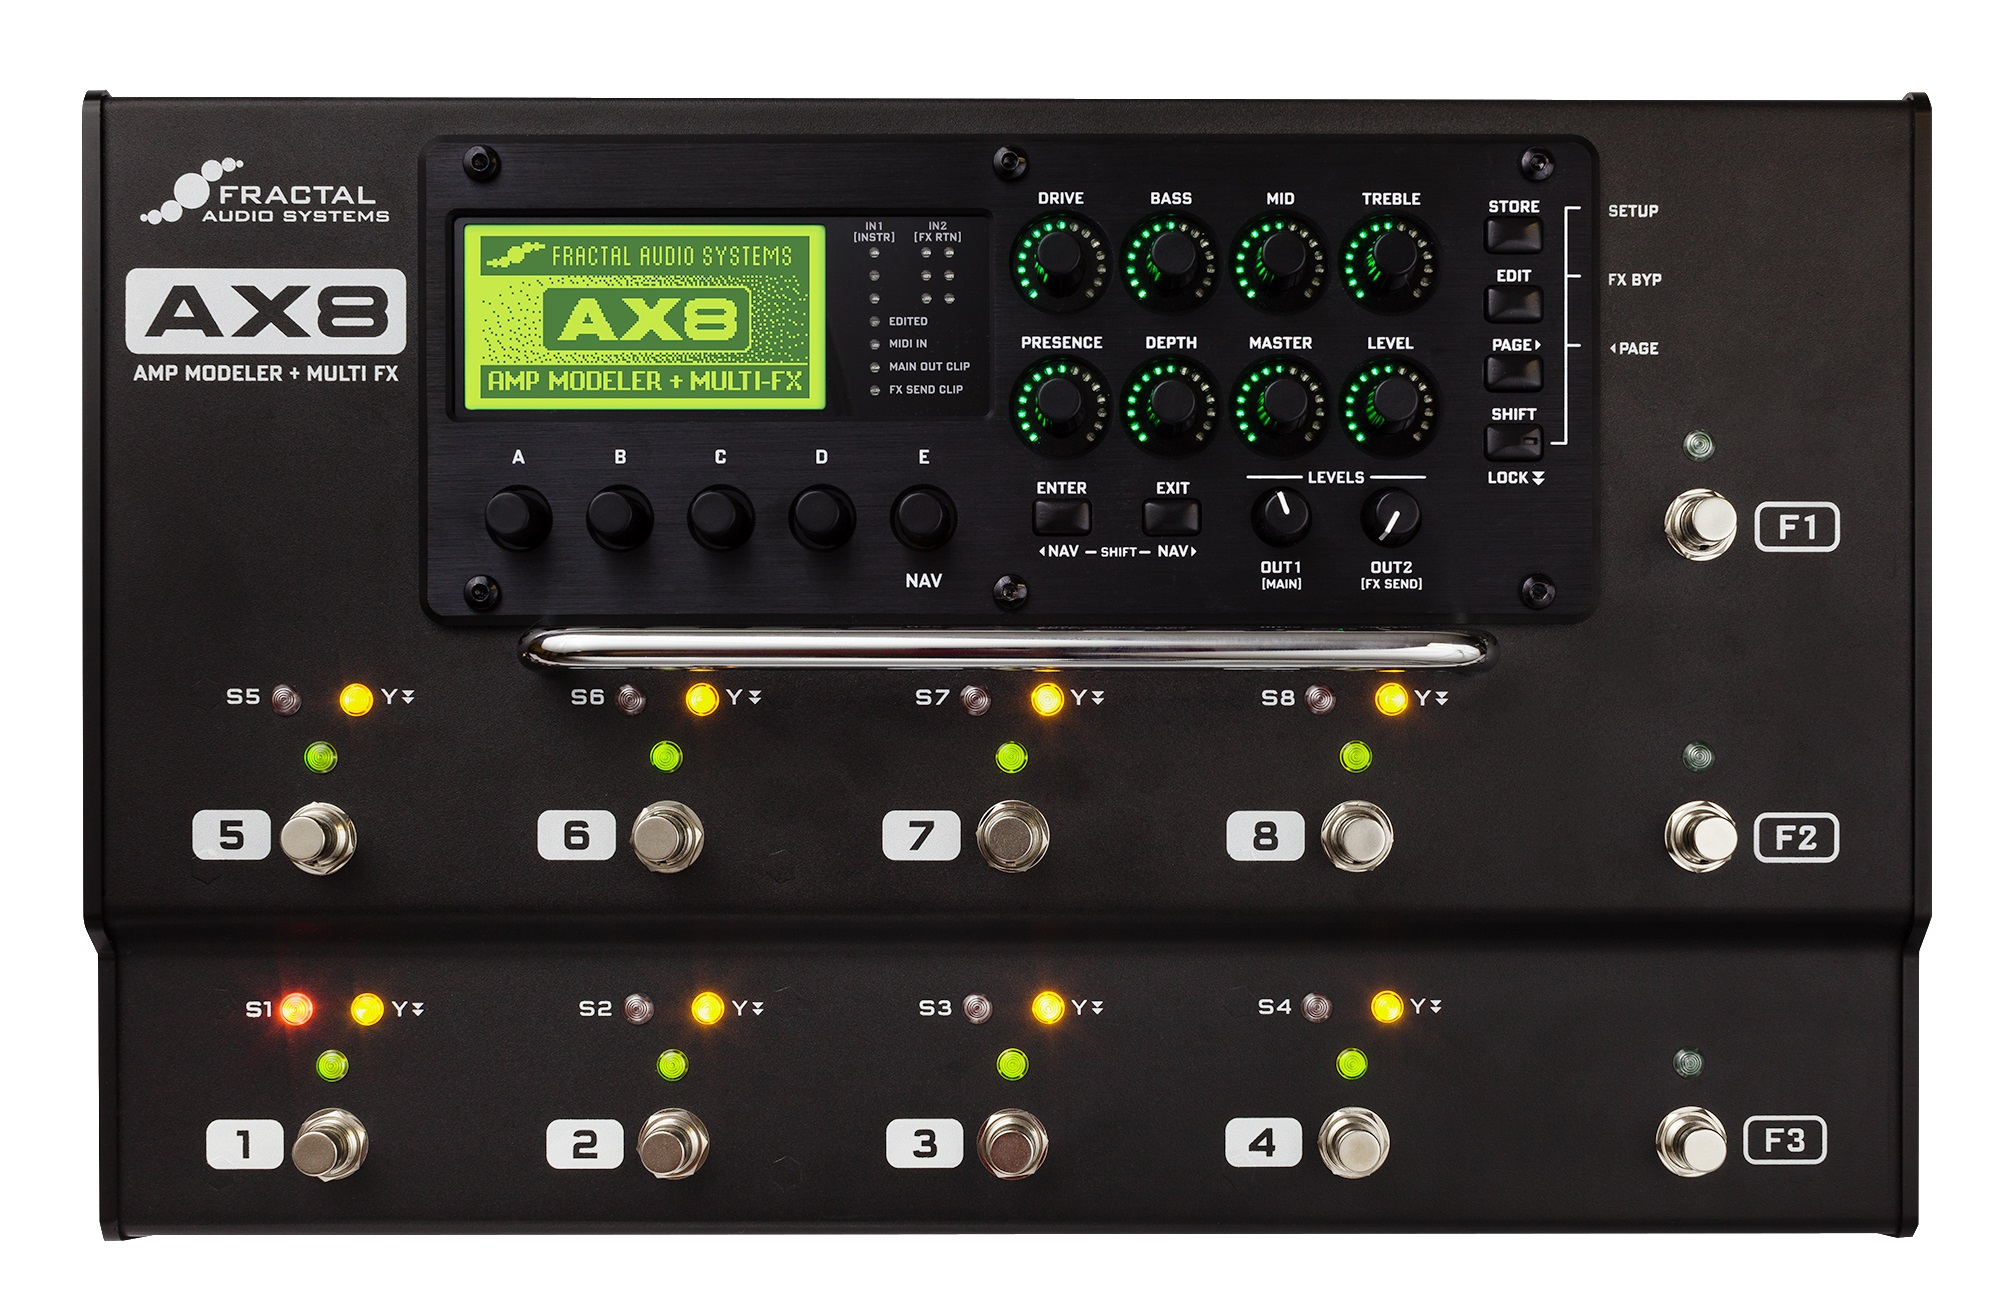 AX8 FRACTAL AUDIO SYSTEMS ax8